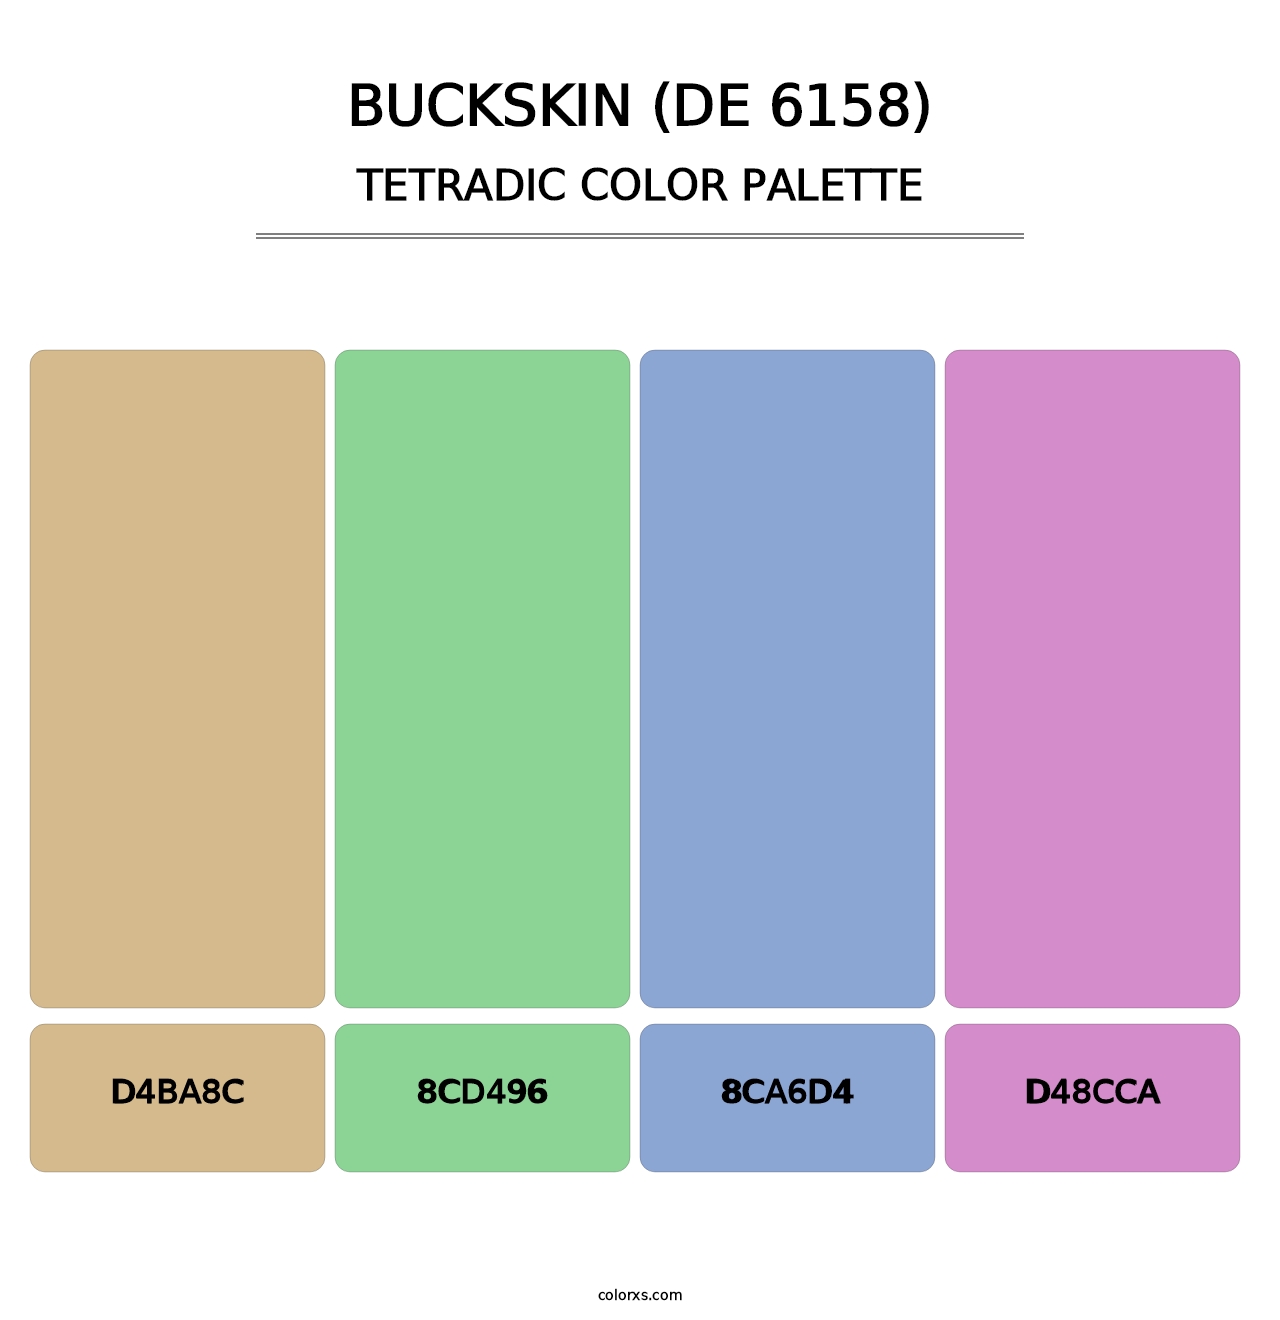 Buckskin (DE 6158) - Tetradic Color Palette